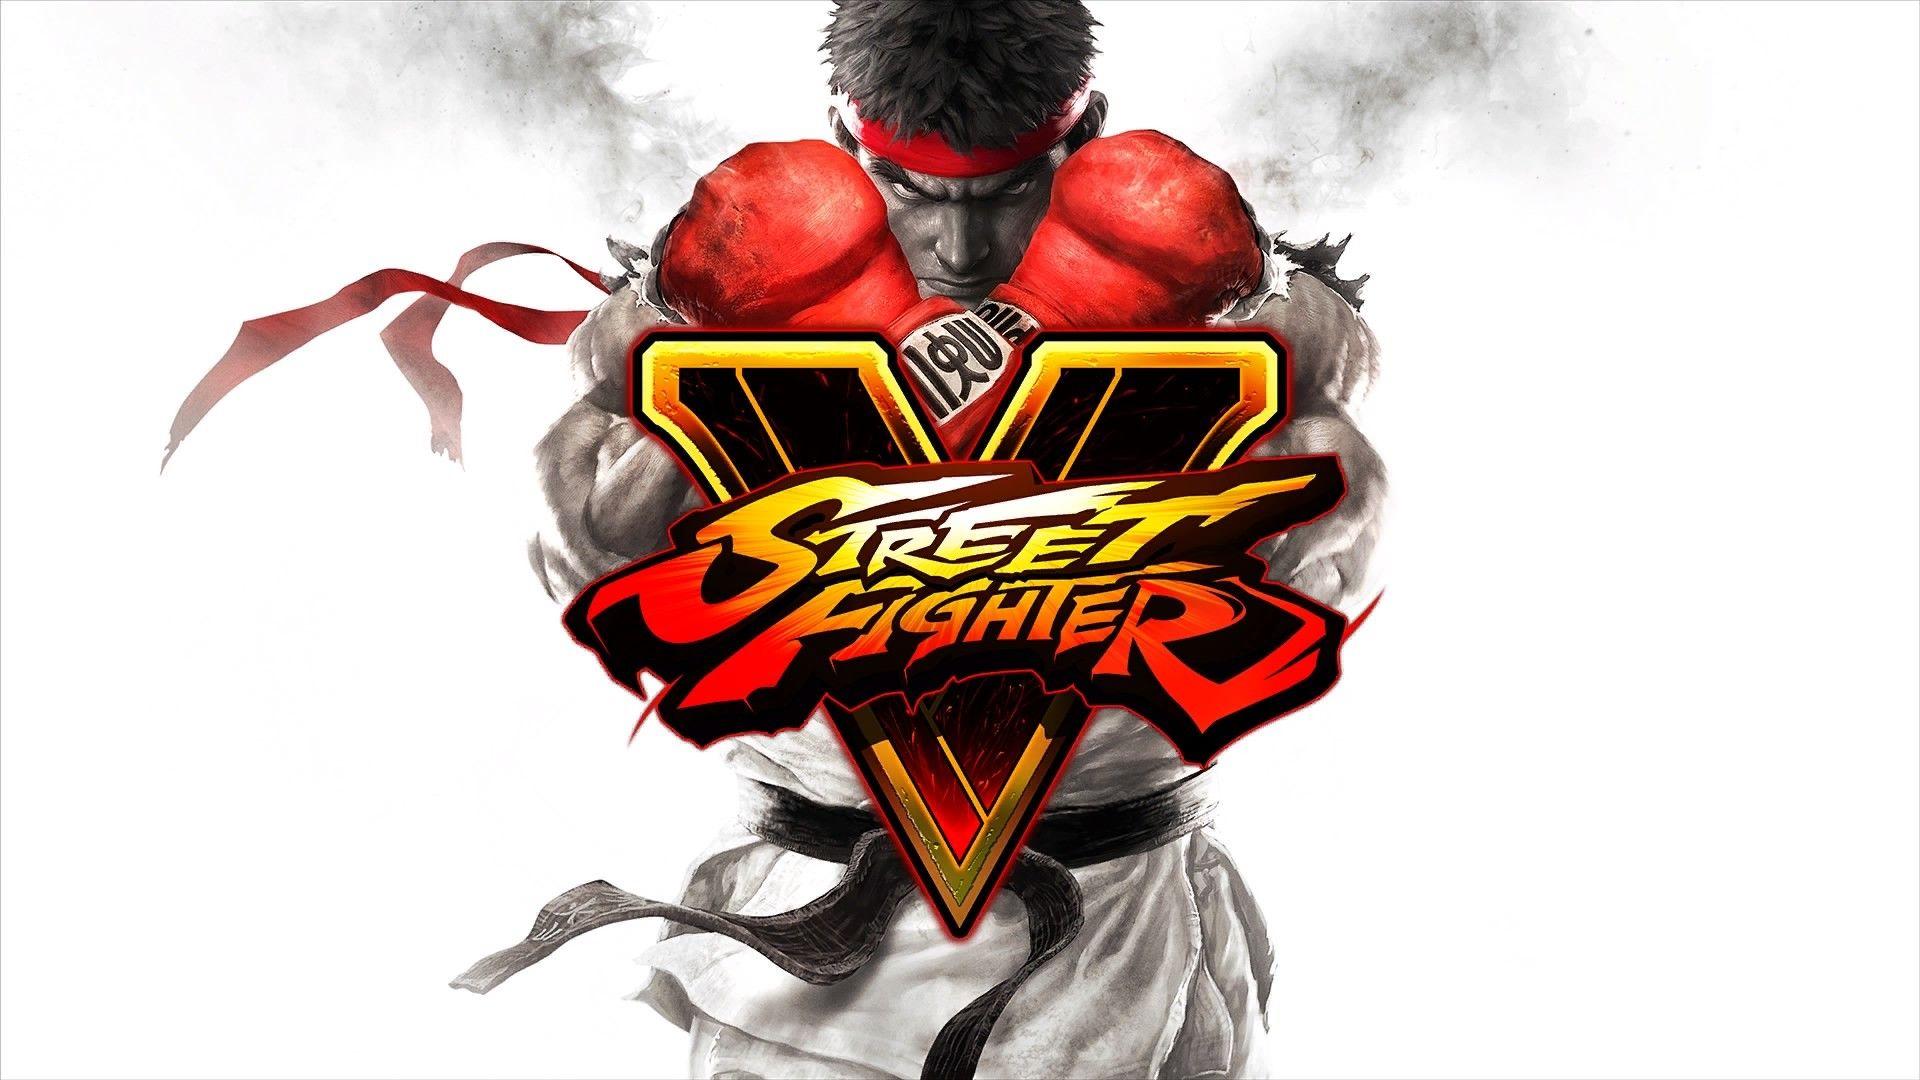 Street Fighter Ryu Wallpaper Full HD Gamers Wallpaper 1080p